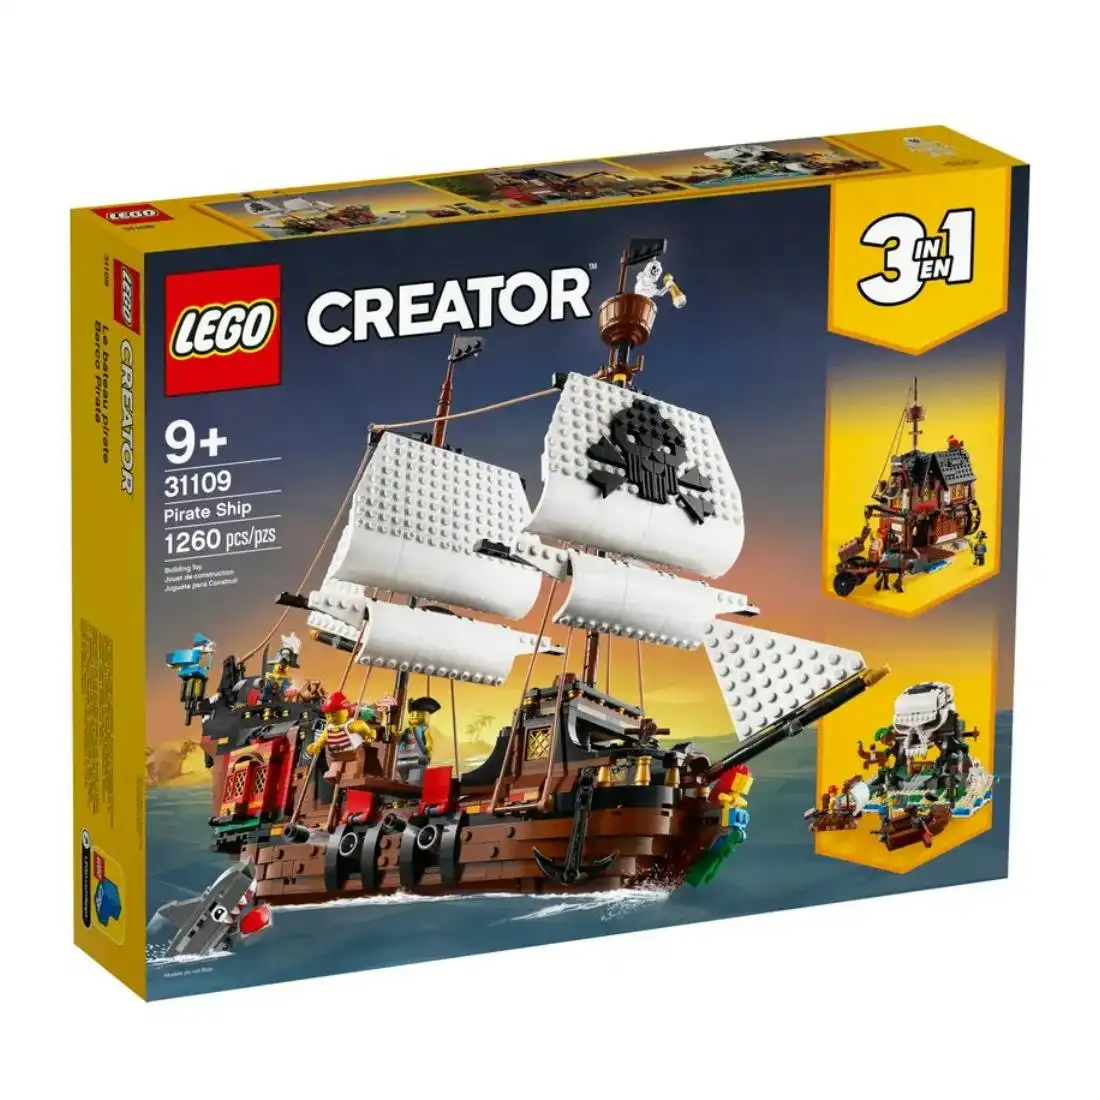 LEGO Creator Pirate Ship Building Kit (31109)